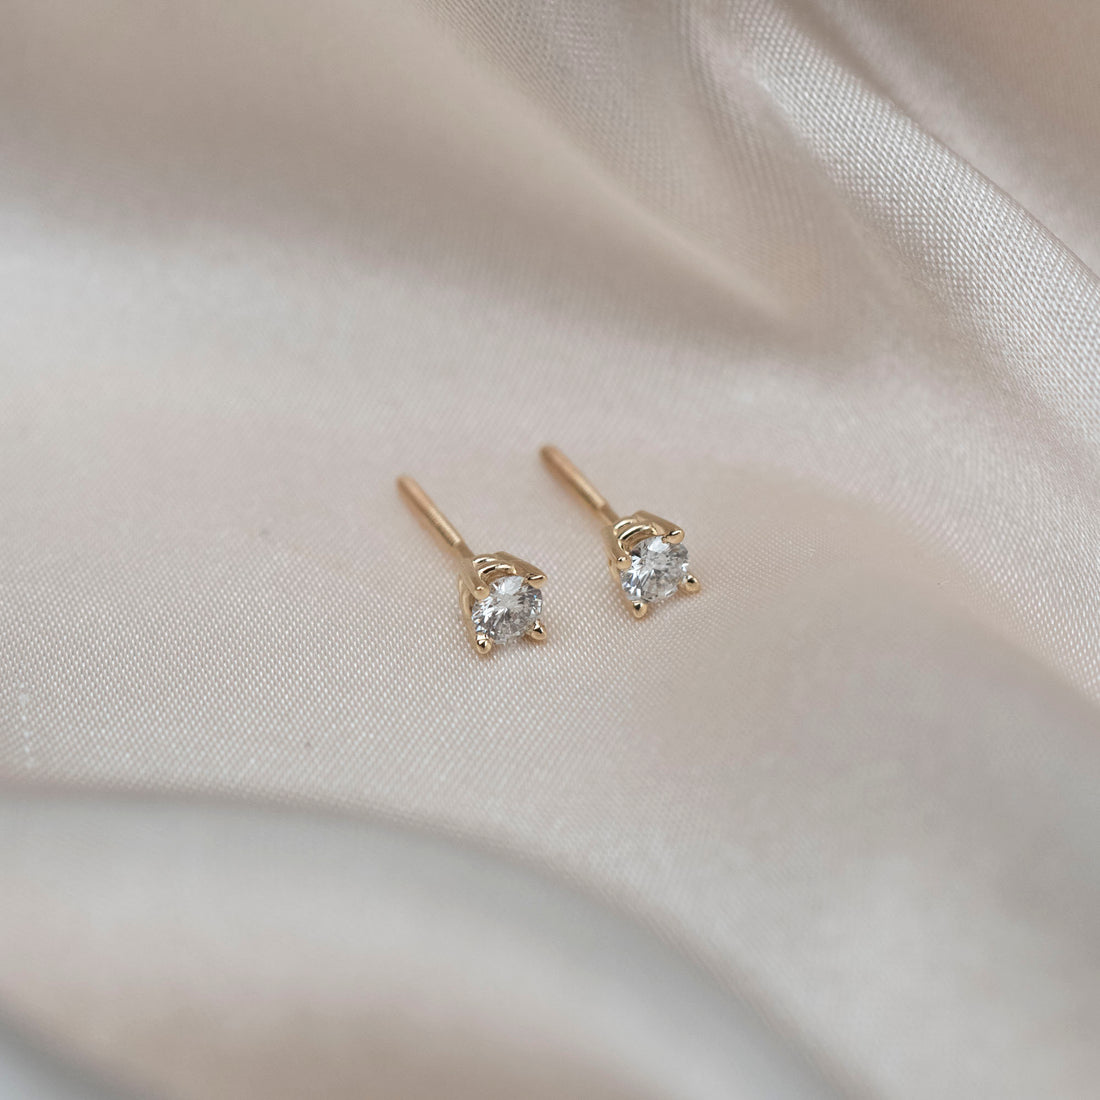 Diamond earrings, plain background on Craiyon